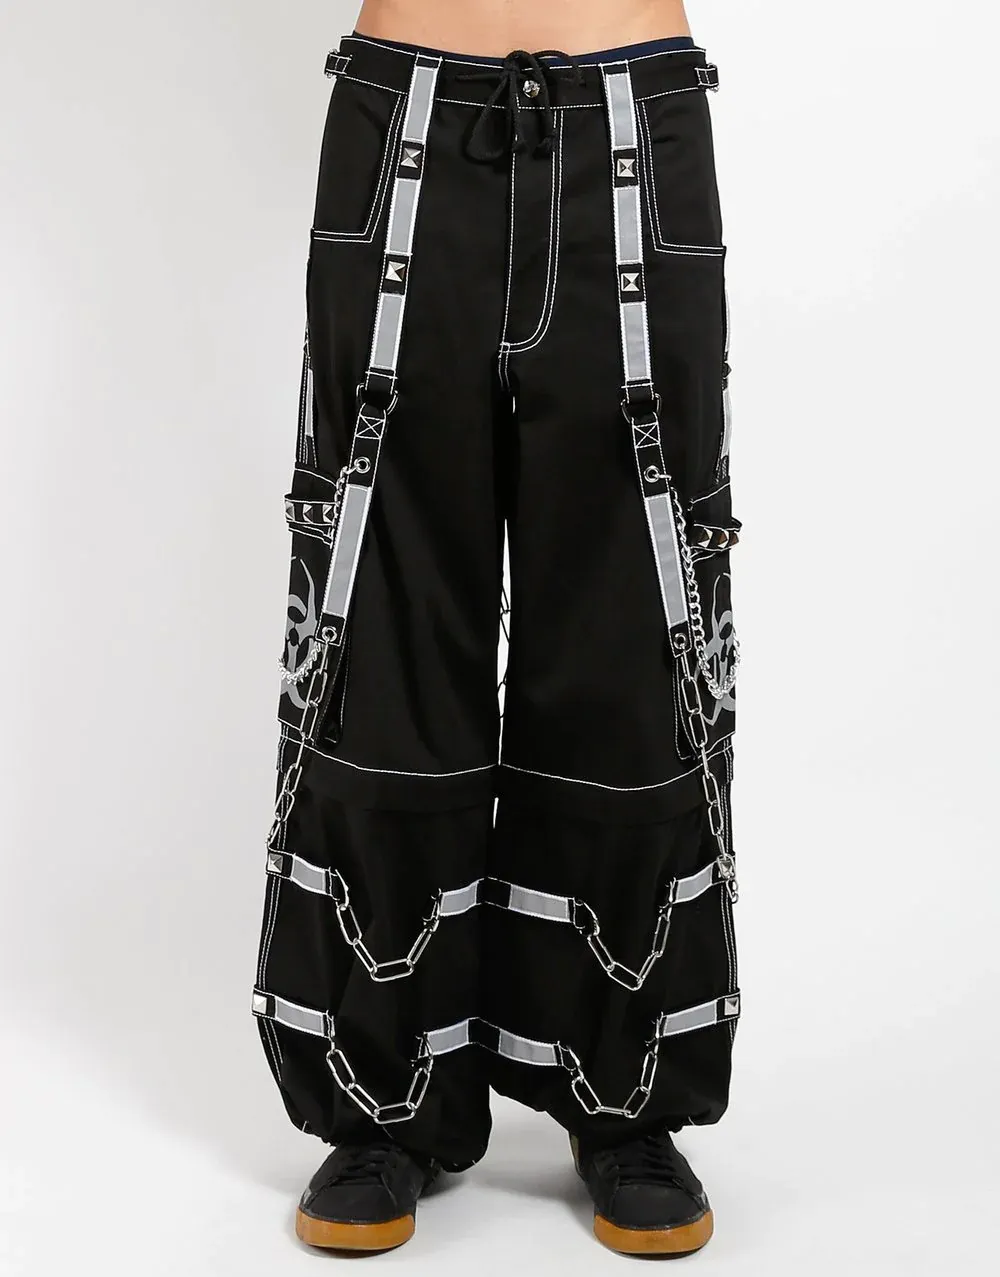 Unisex Gothic Pants Cross Straps Loose Fit Zipper and Chain Details Custom Reflector Pant Men Women Gothic Pants Trousers